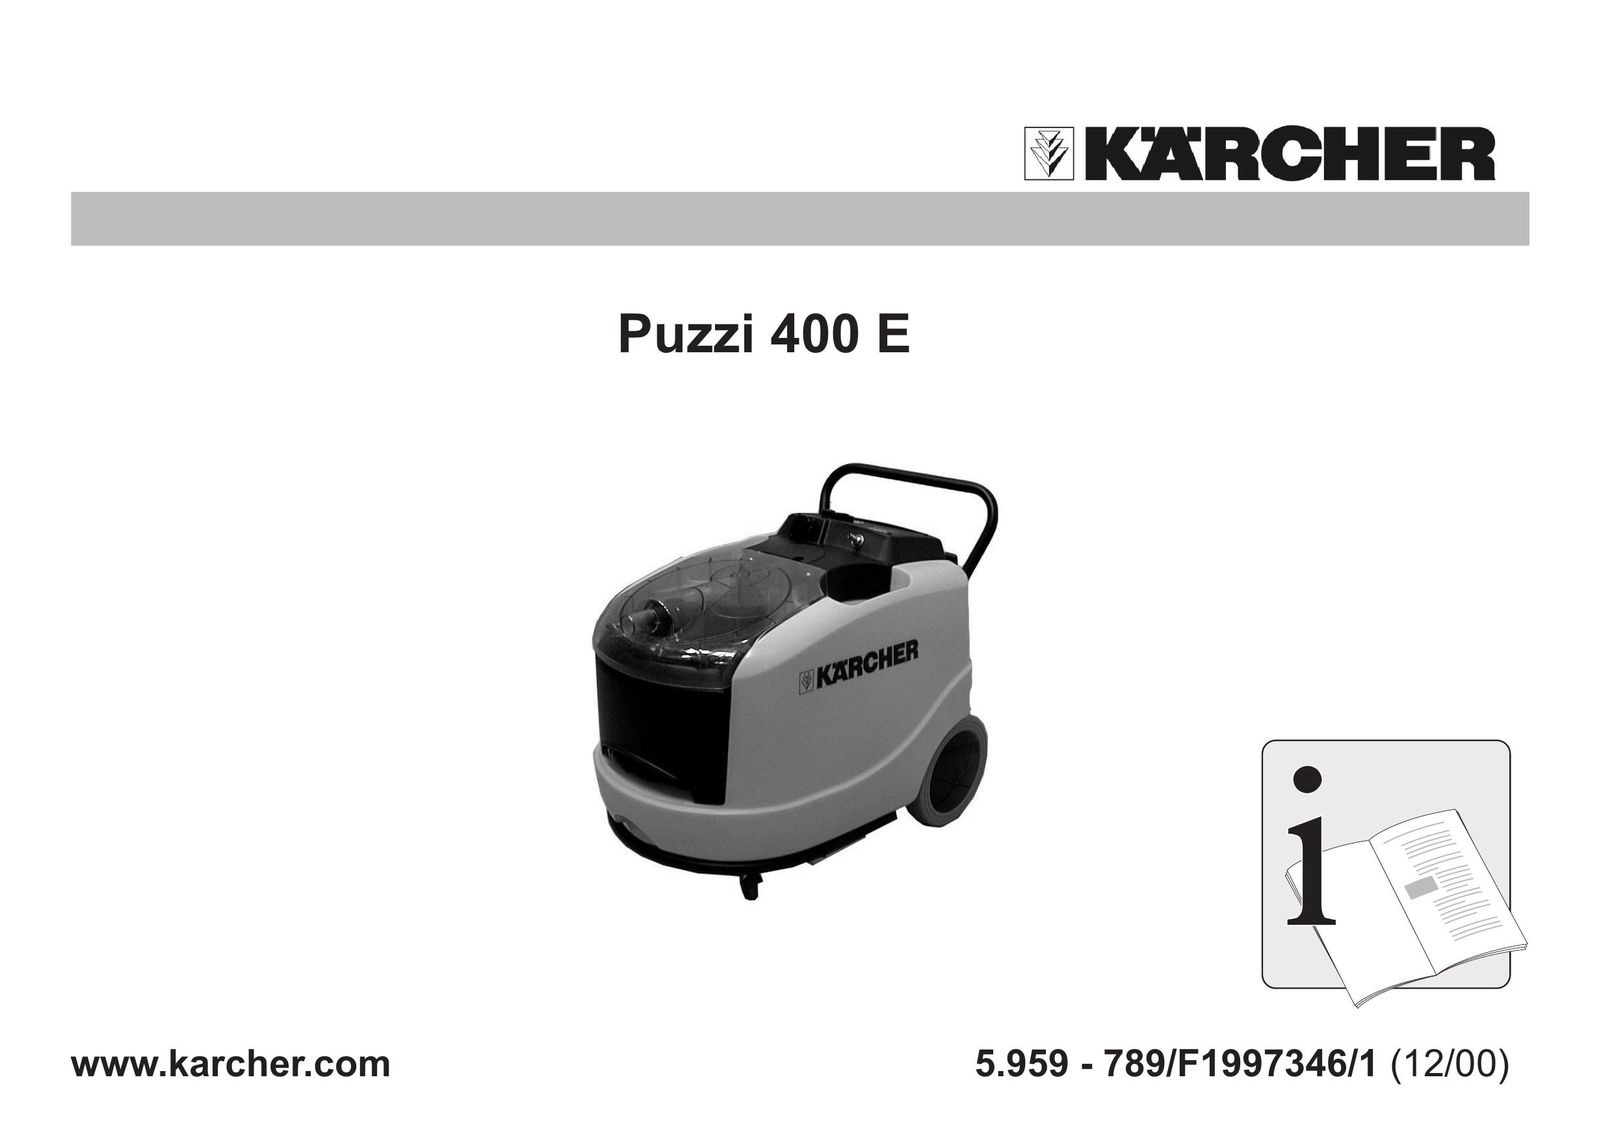 Karcher 400 E Electric Heater User Manual